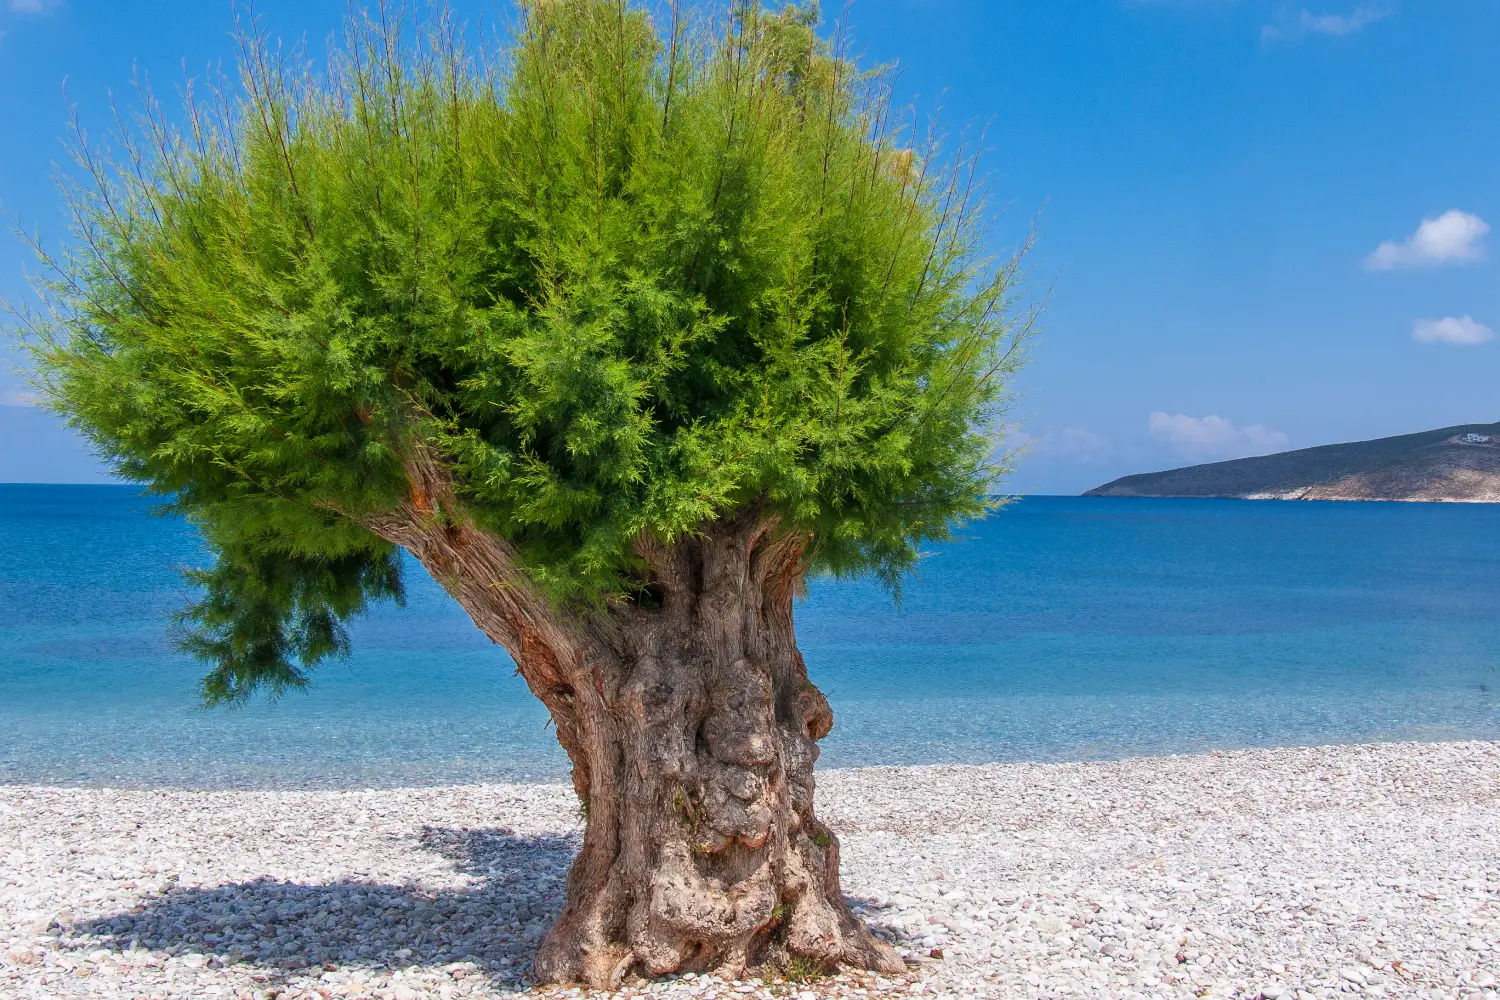 Ferry to Tilos - Tree at the beach of Livadia, Tilos island